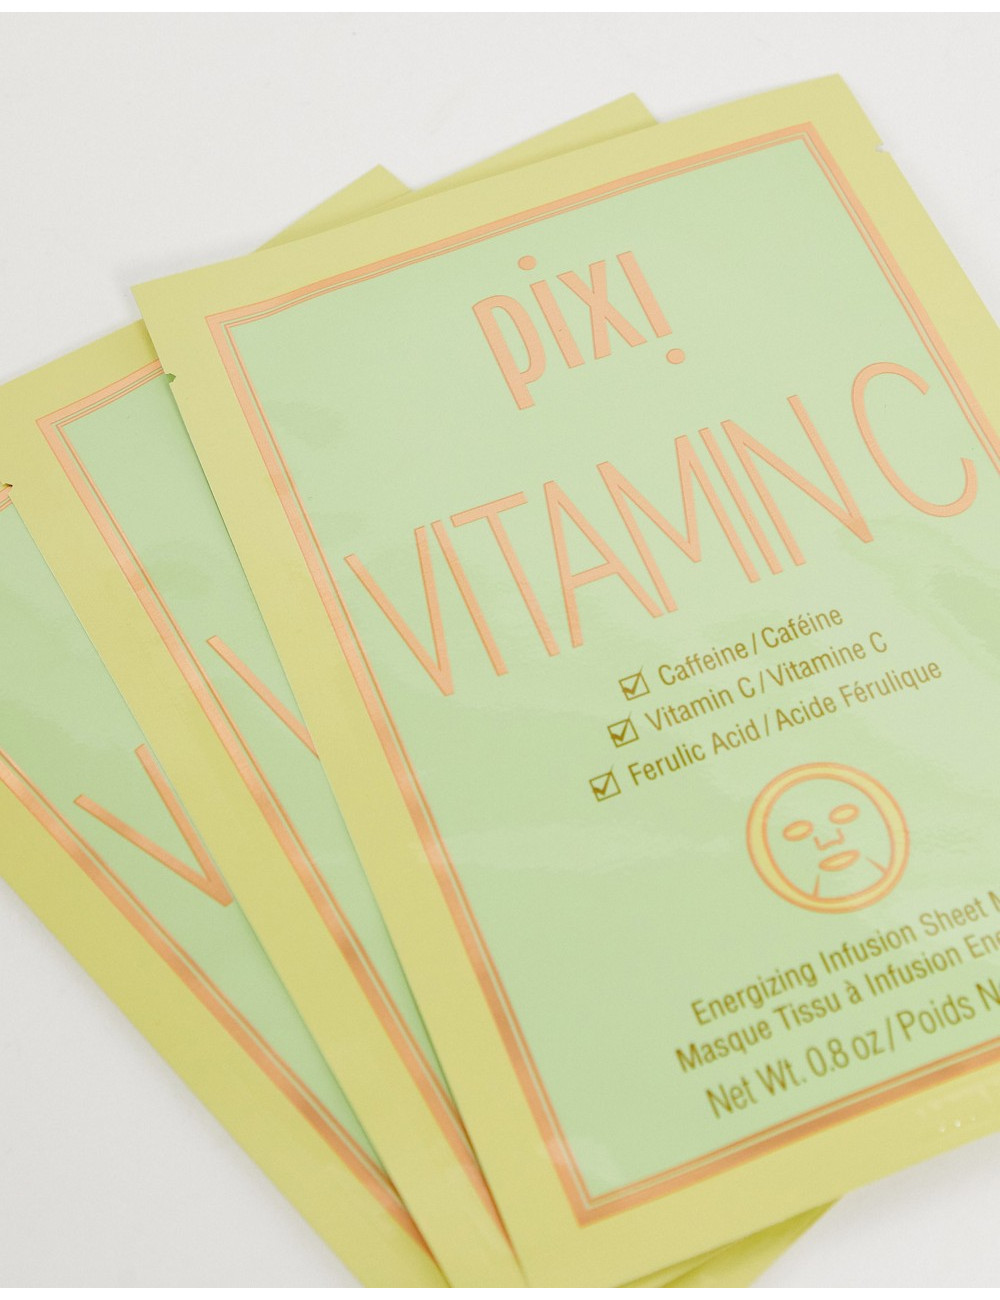 Pixi Vitamin-C Sheet Mask...